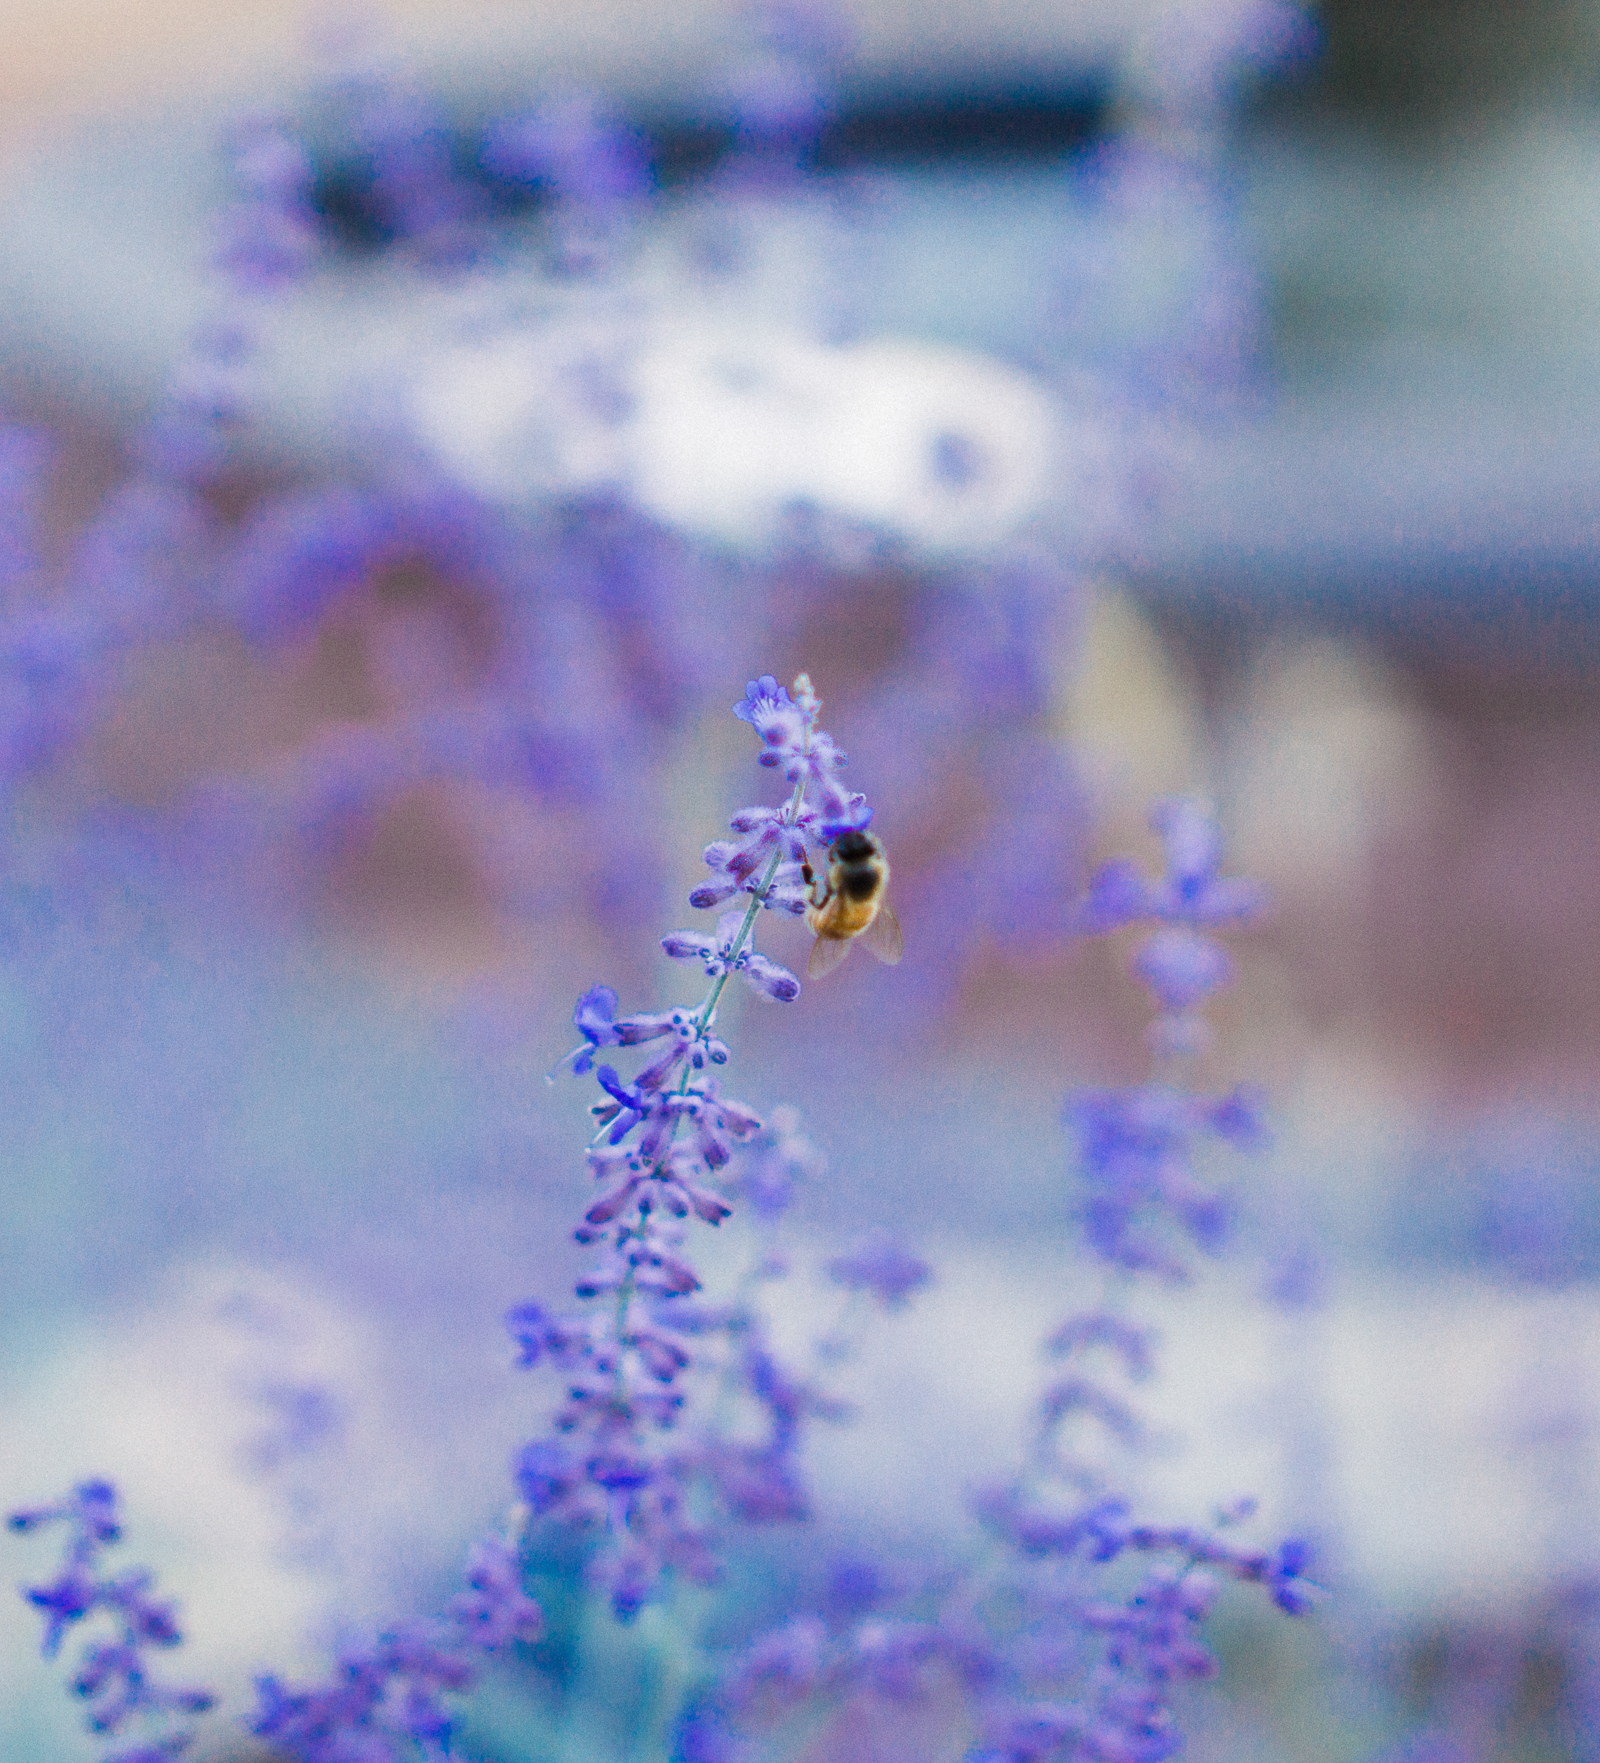 Bee on a Flower at the La Posada Santa Fe